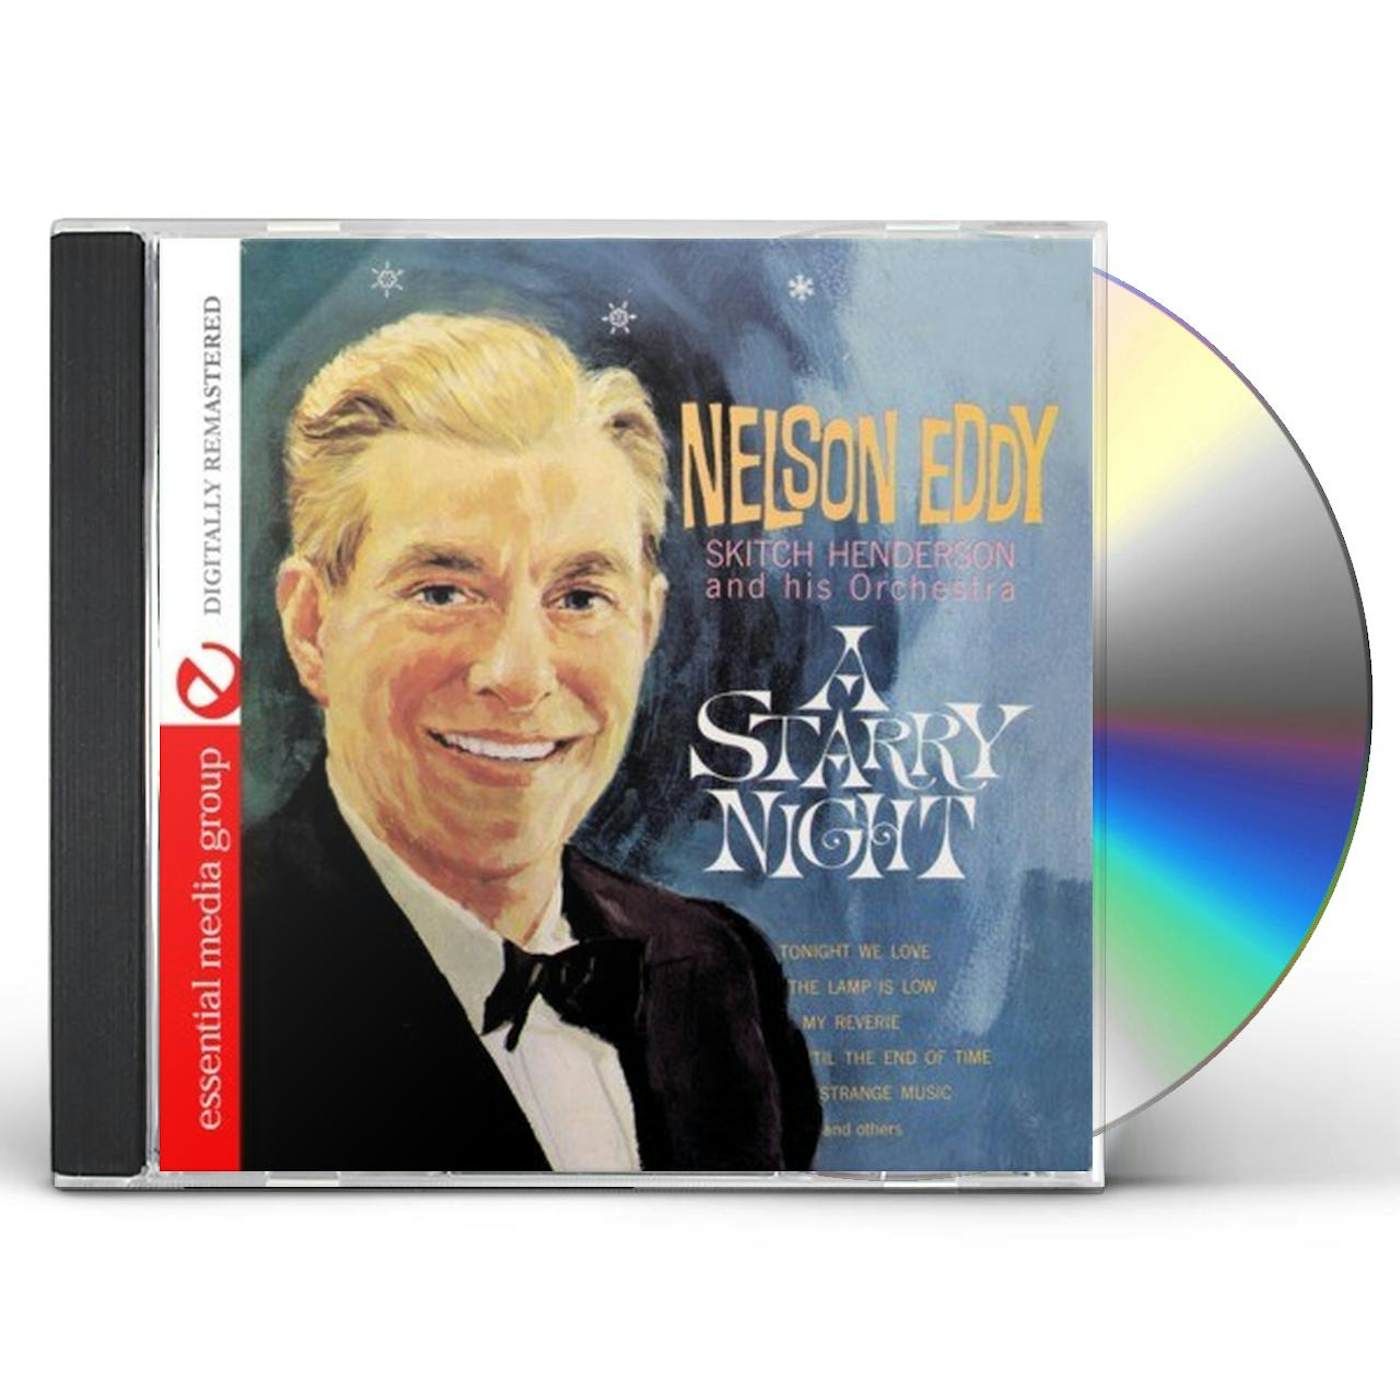 Nelson Eddy STARRY NIGHT CD